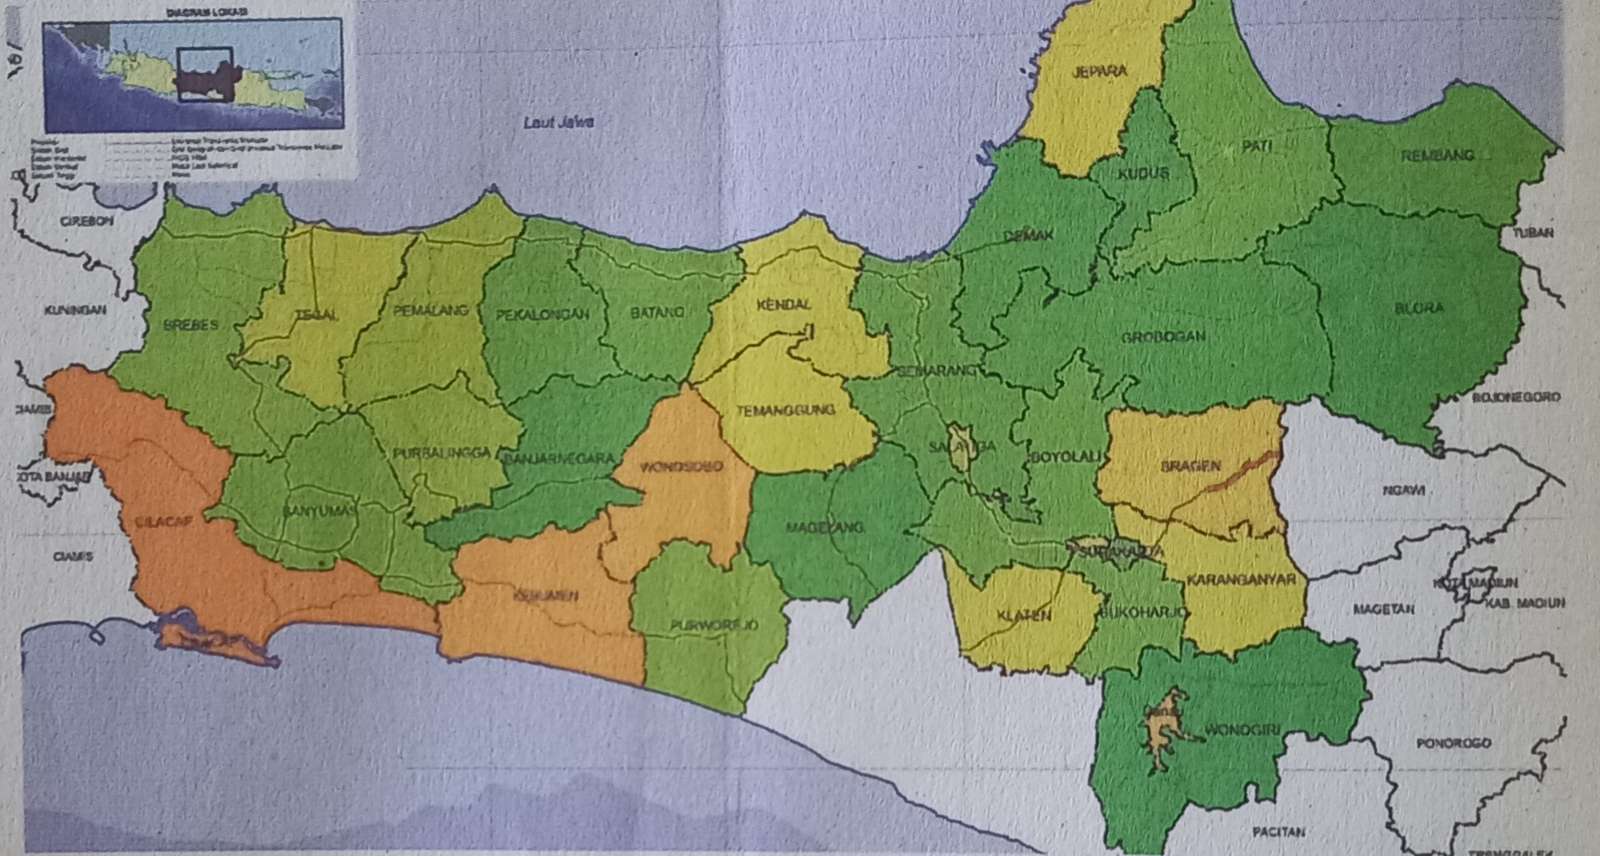 Peta Indonésia puzzle online a partir de fotografia